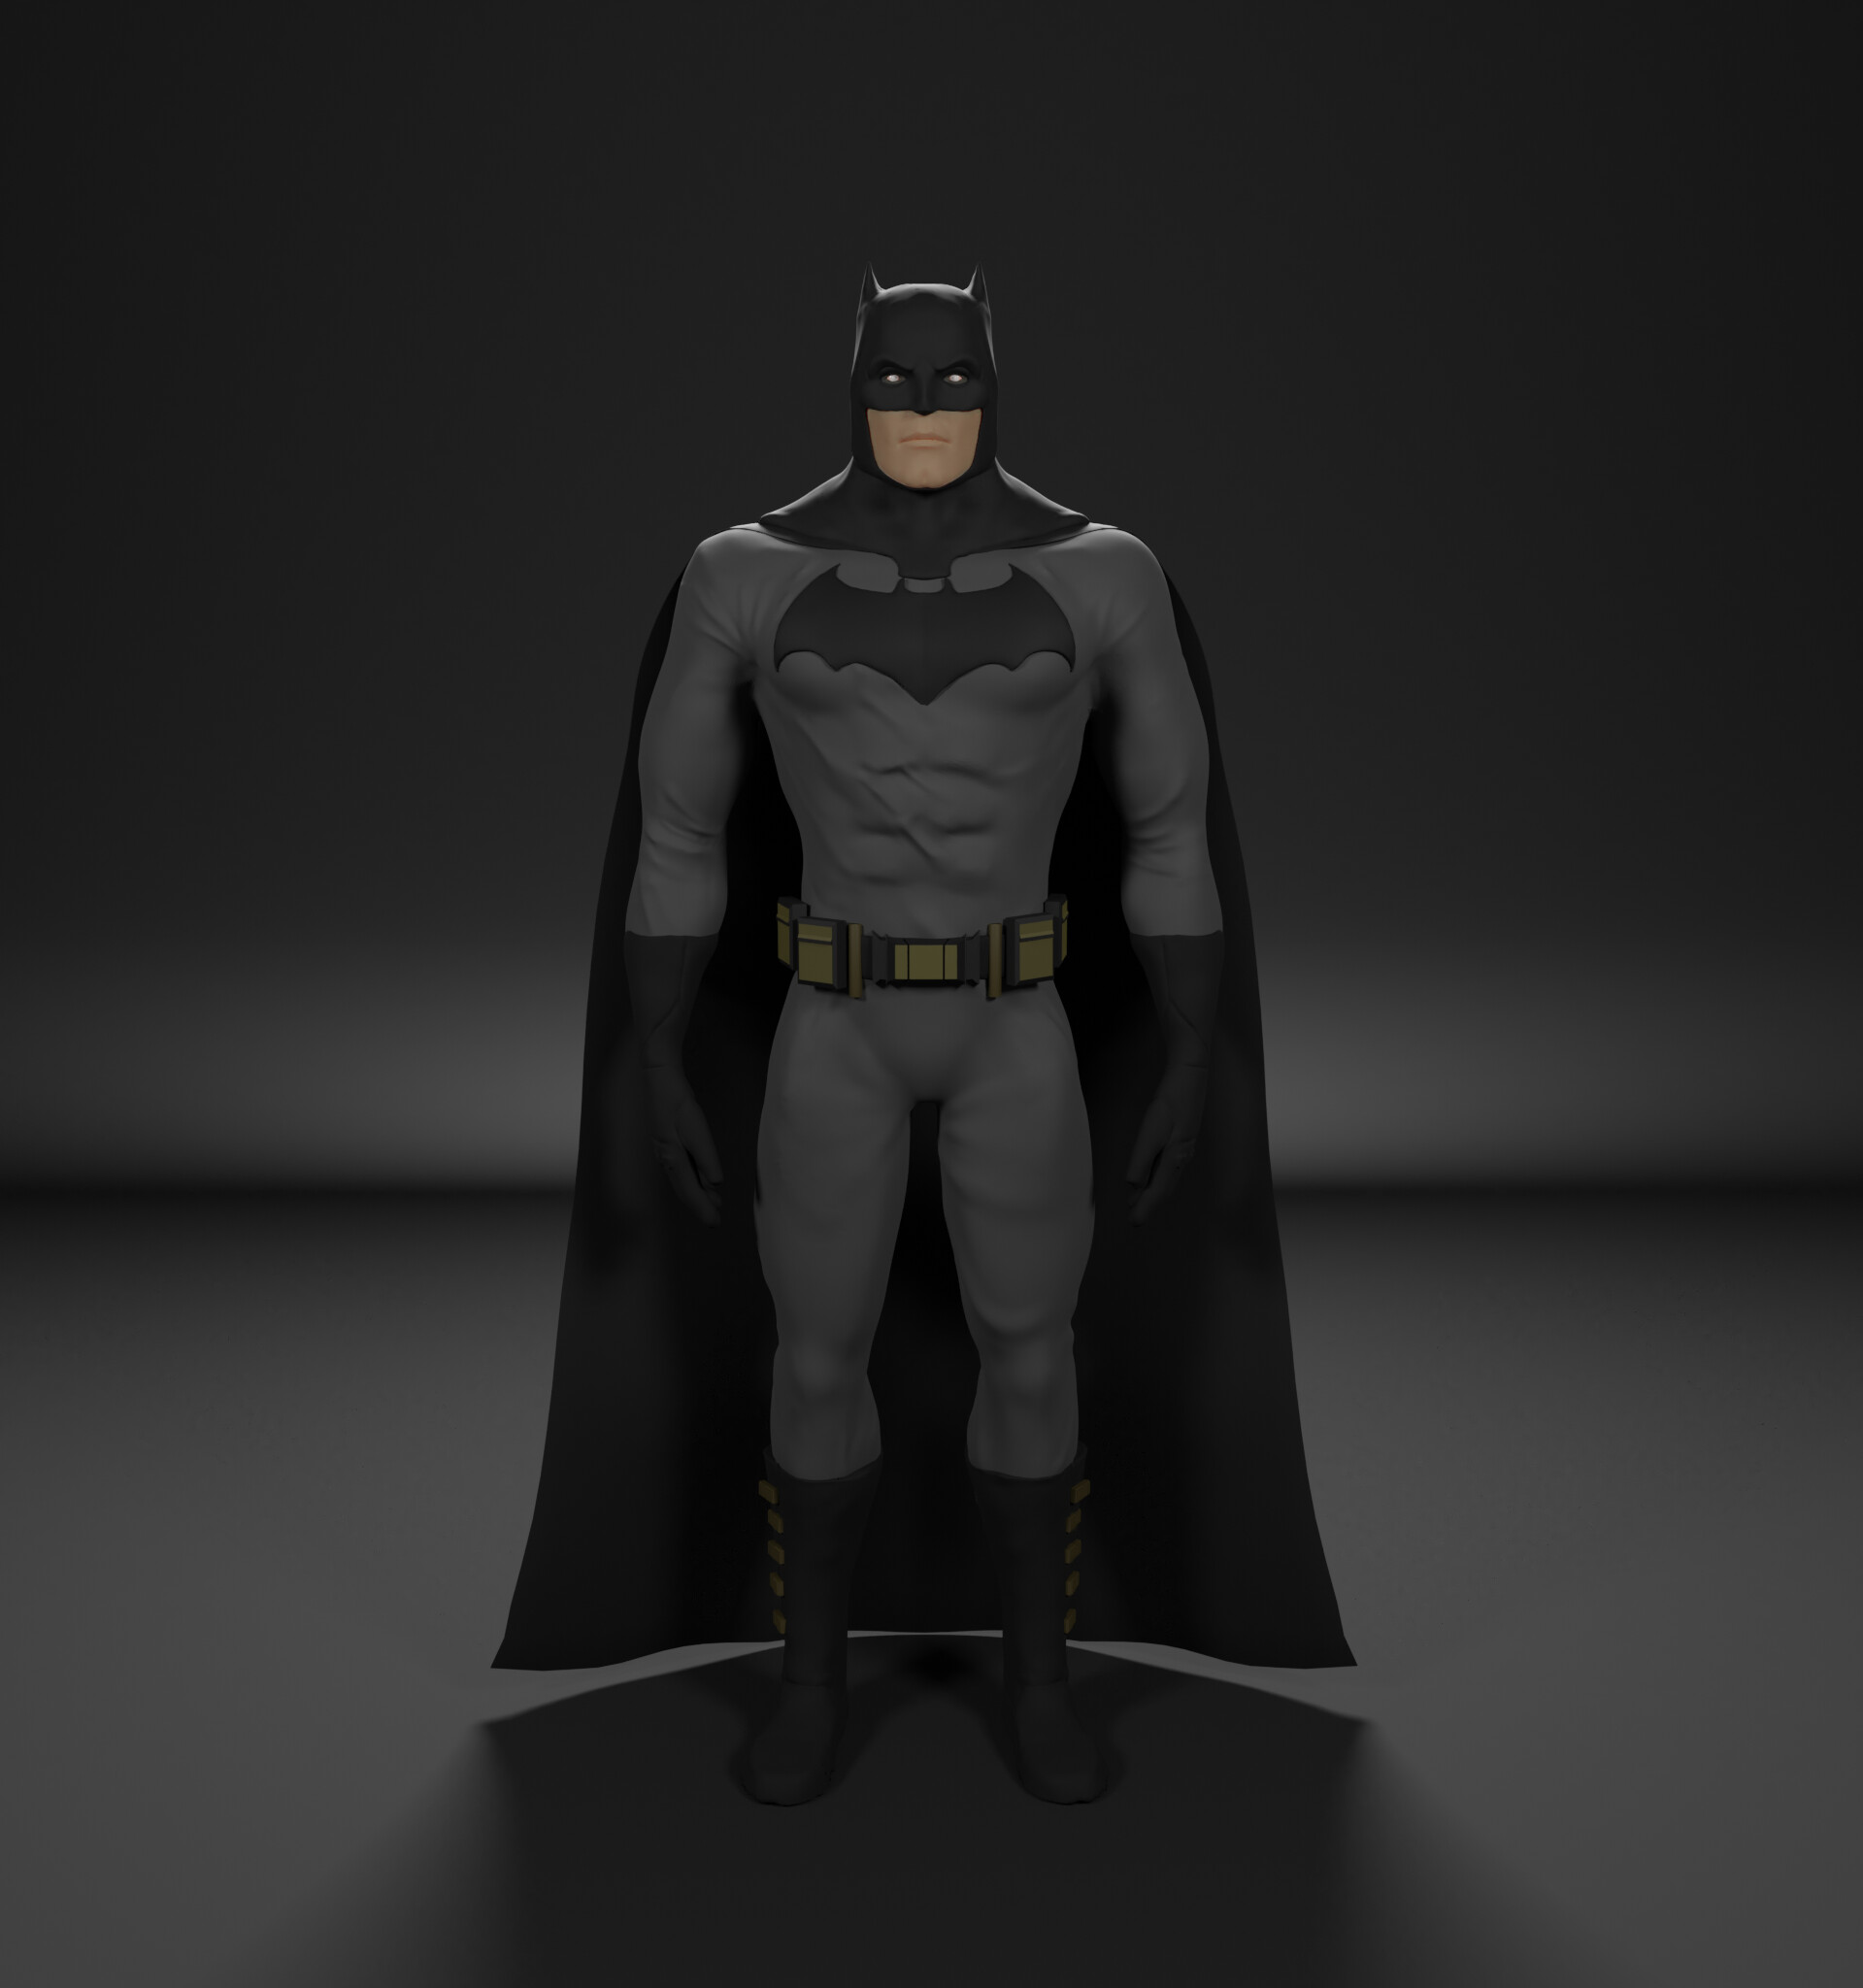 ArtStation - Batman stylized sculpt